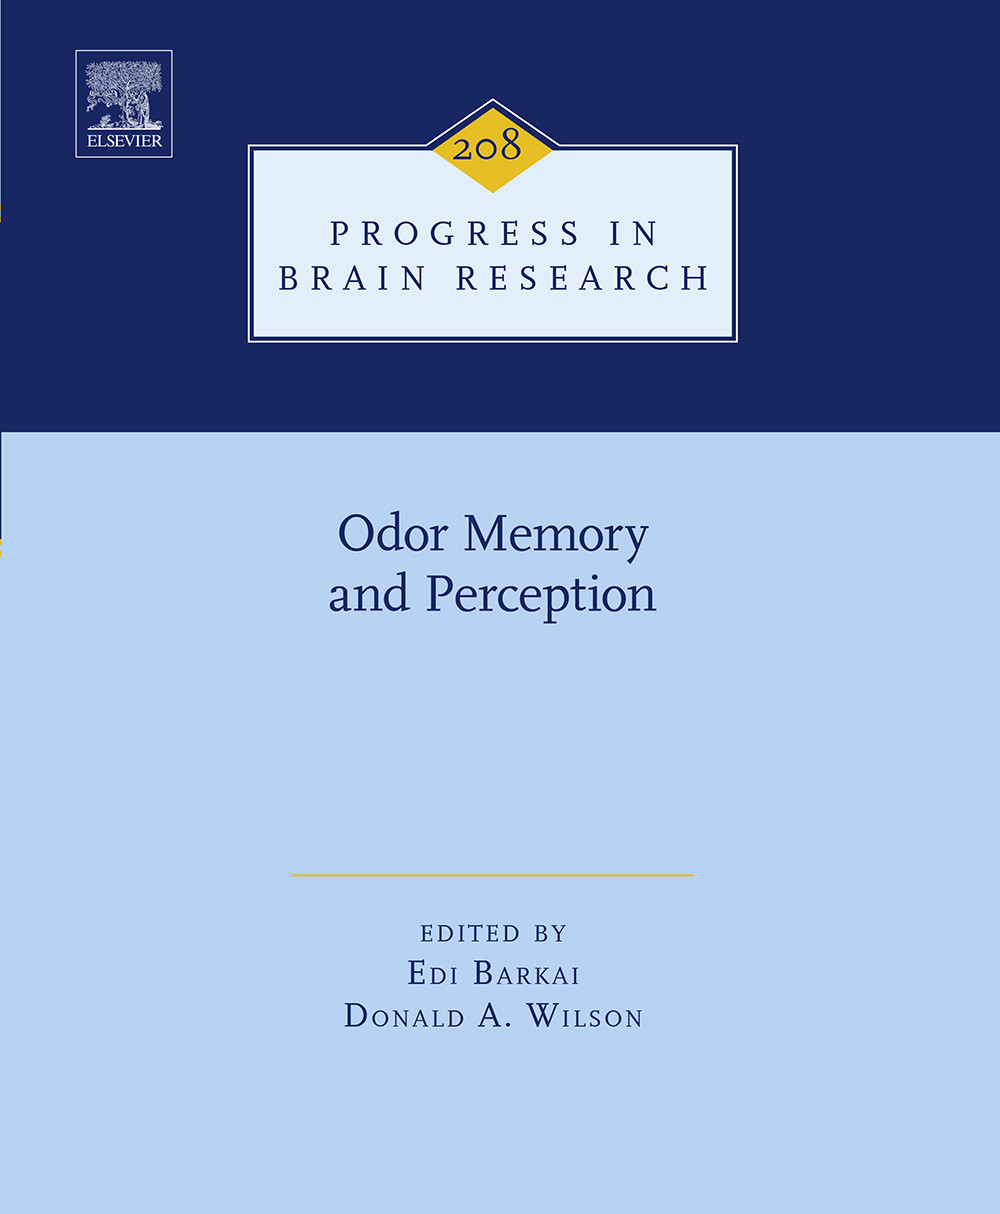 Odor Memory and Perception